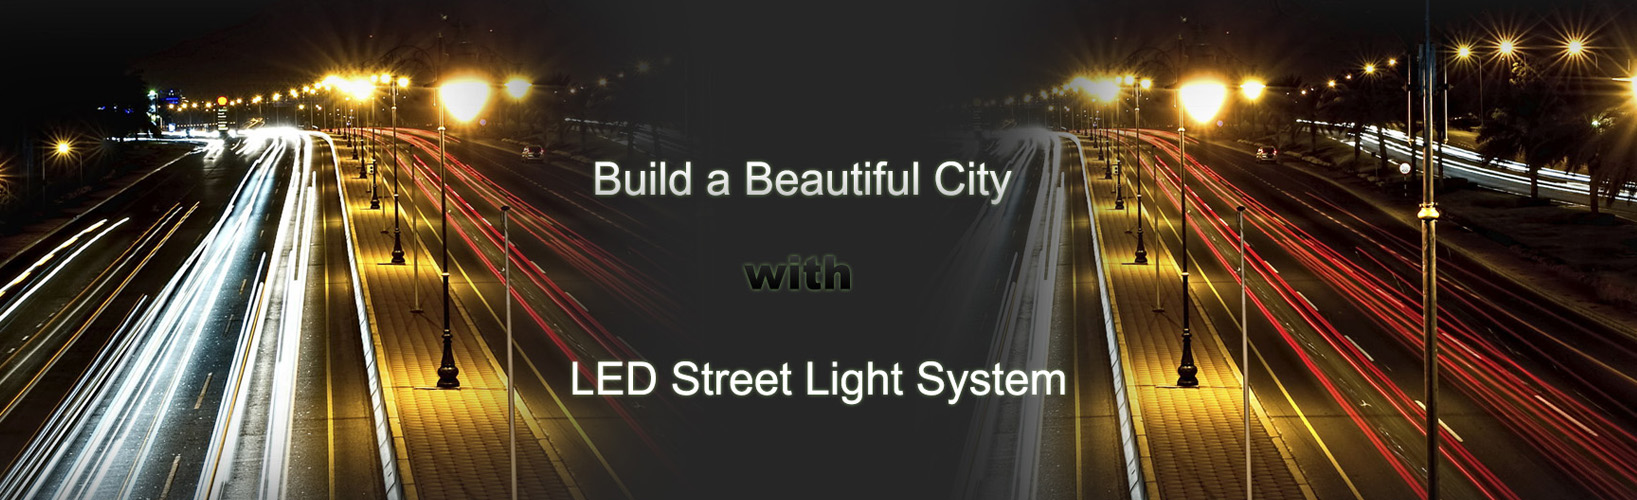 LED Street Light Manufacturer Banner - SUNPER LED